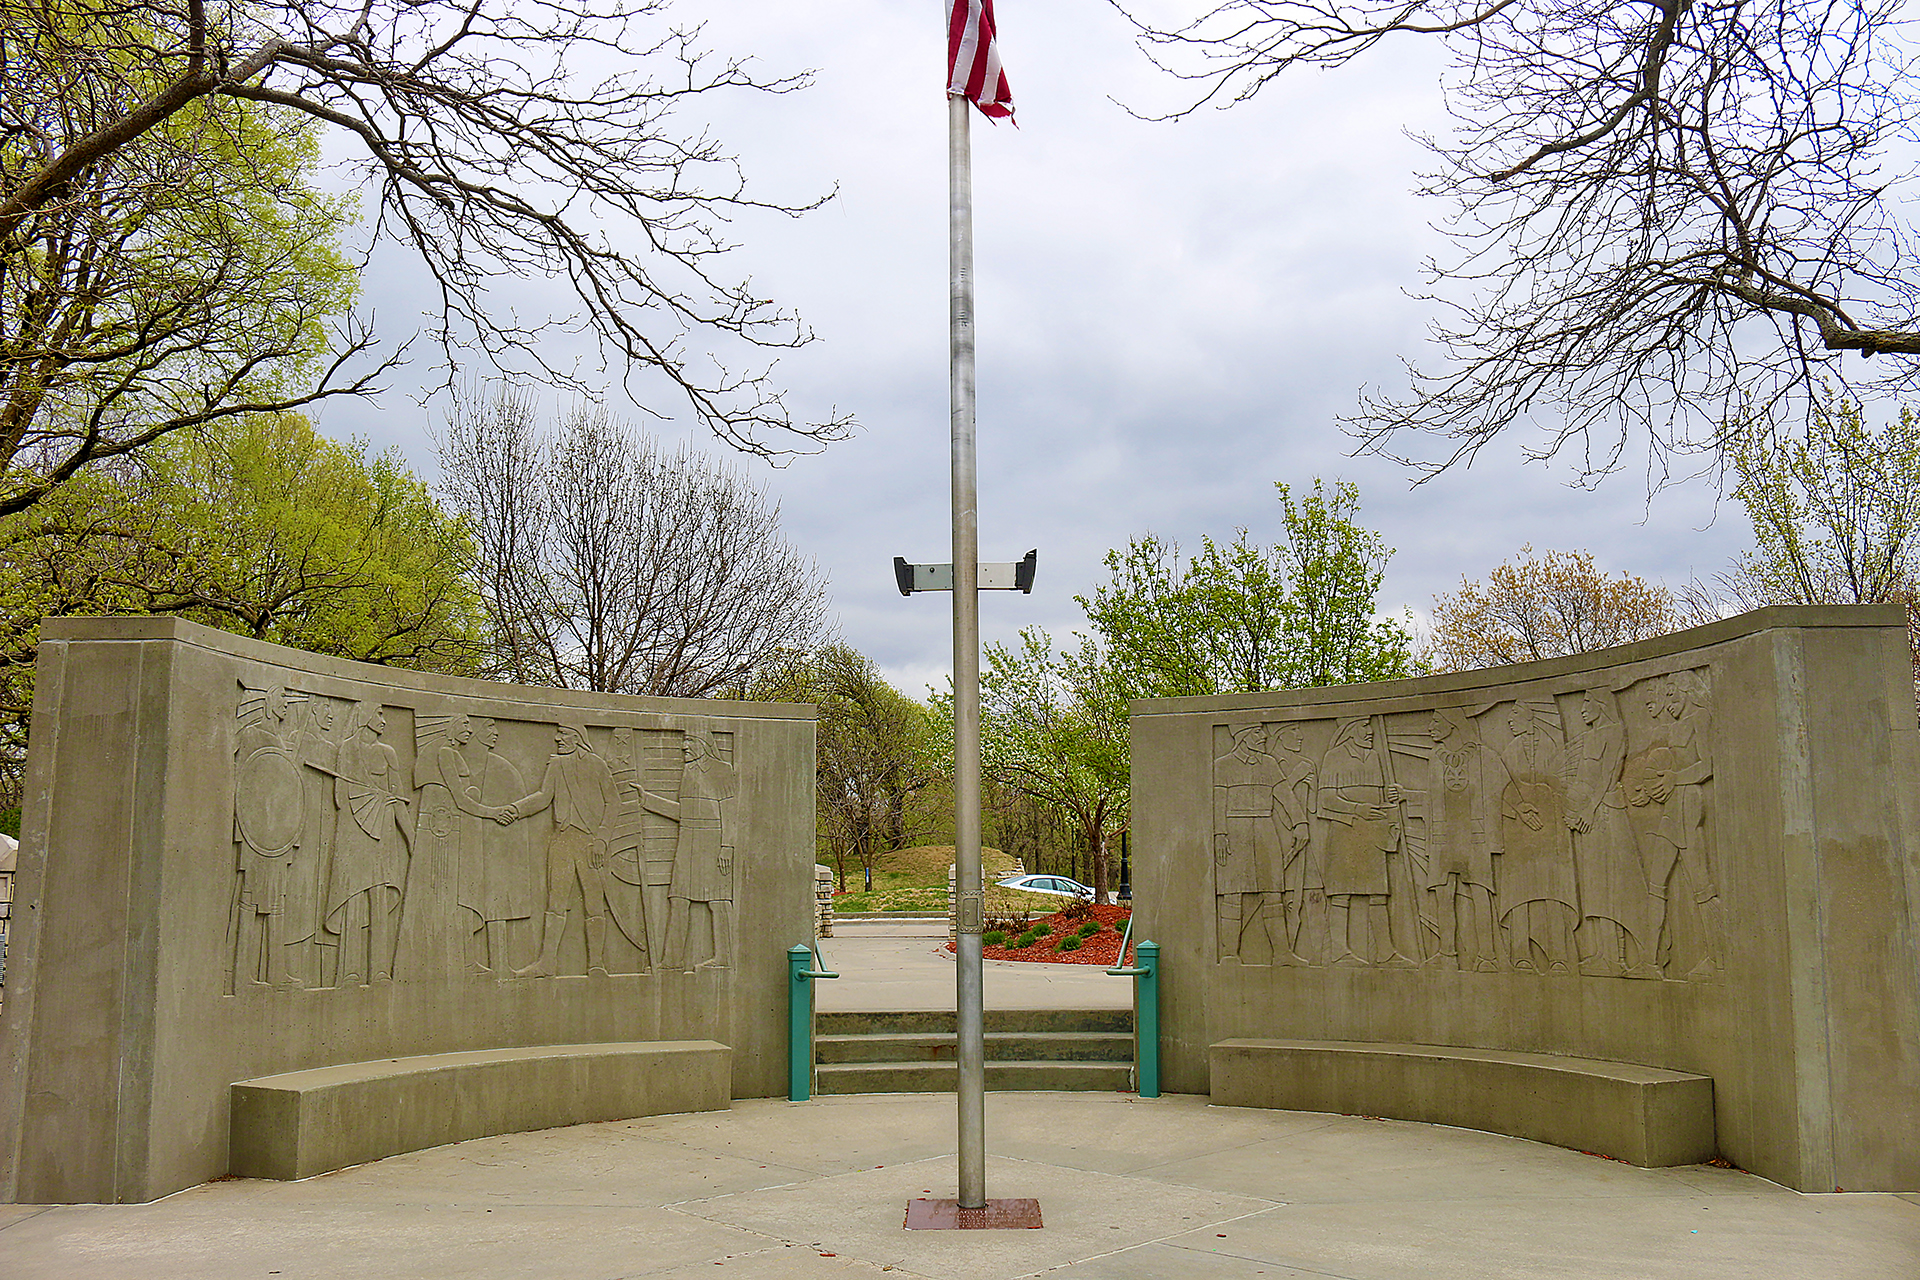 Lewis and Clark Monument Park